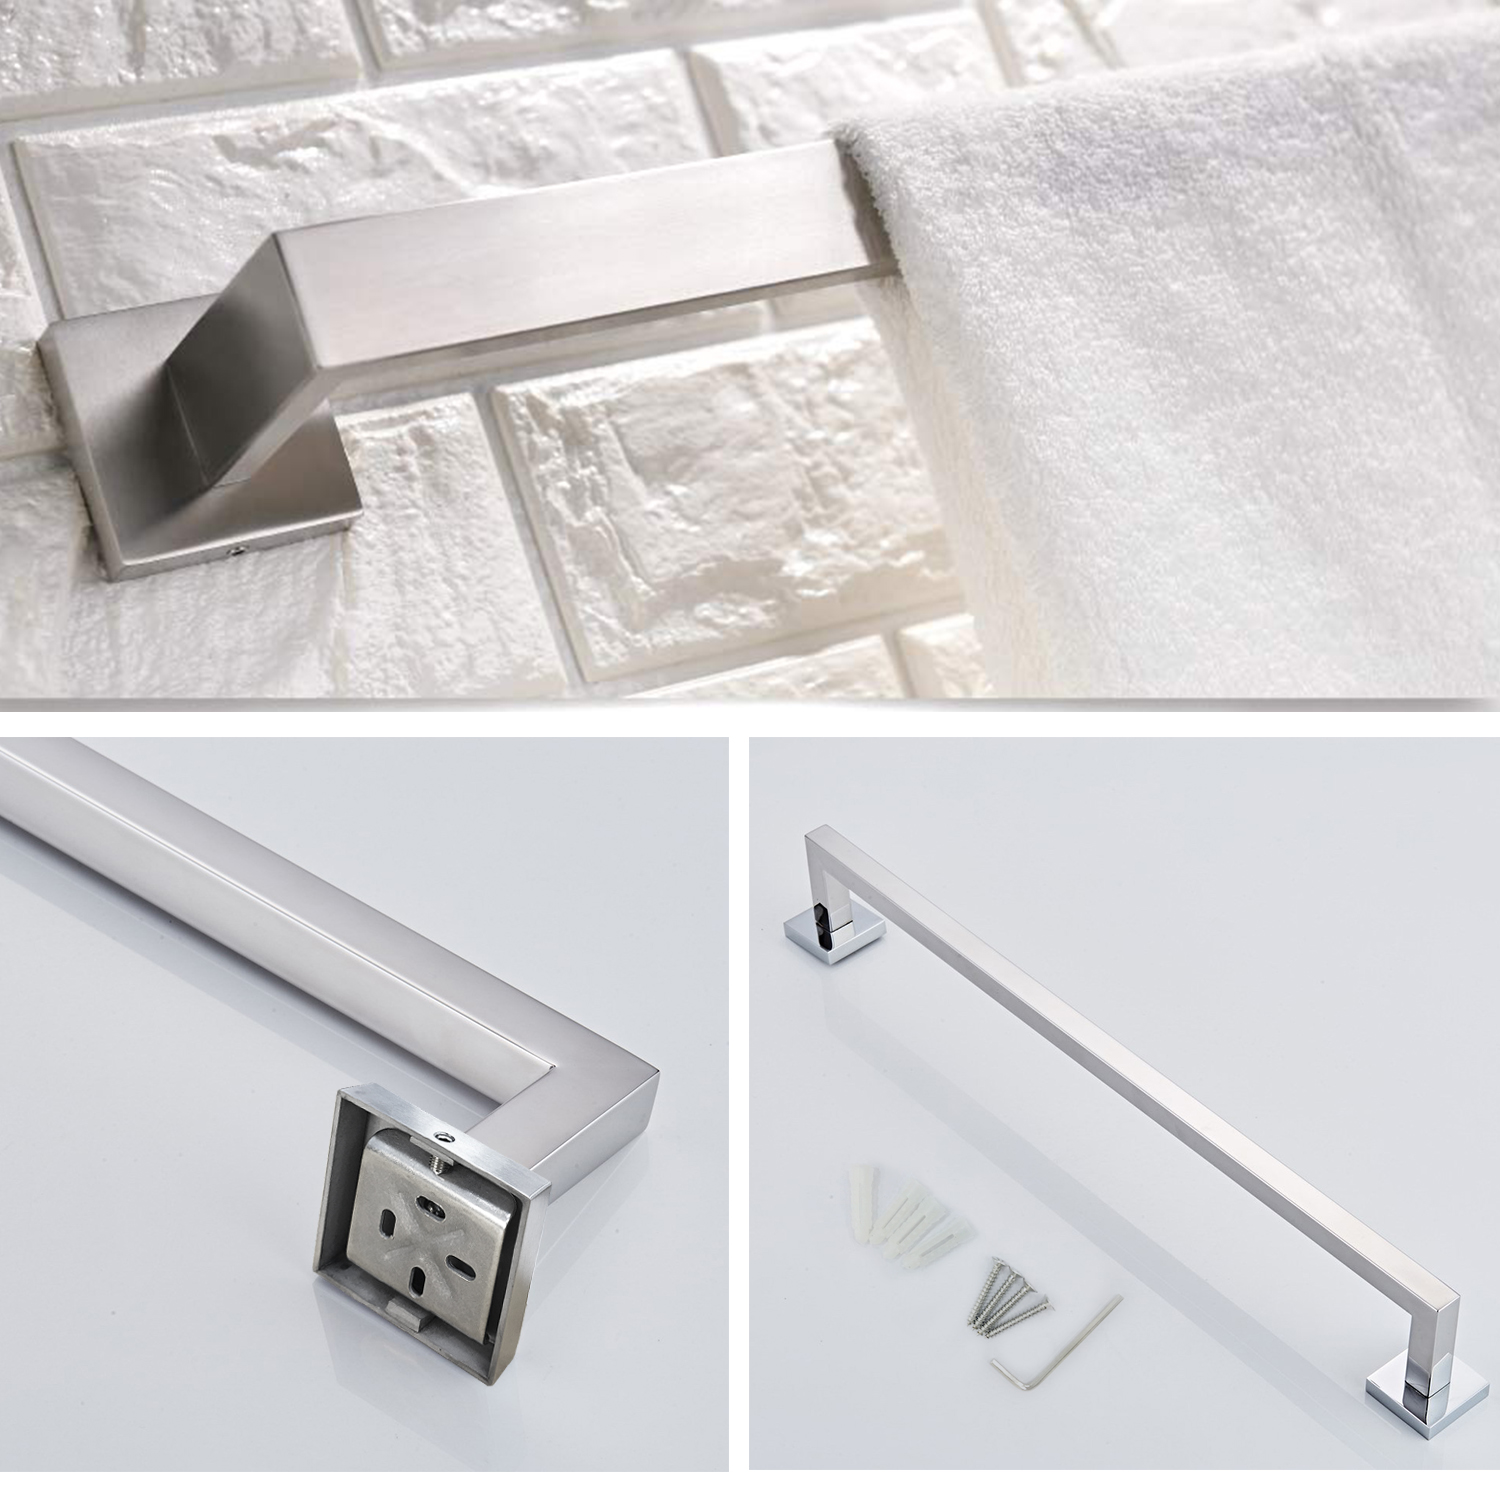 Paper Towel Holder Towel Bar 4 Pieces Bathroom Hardware Accessories Set Brushed Nickel Finished Silver